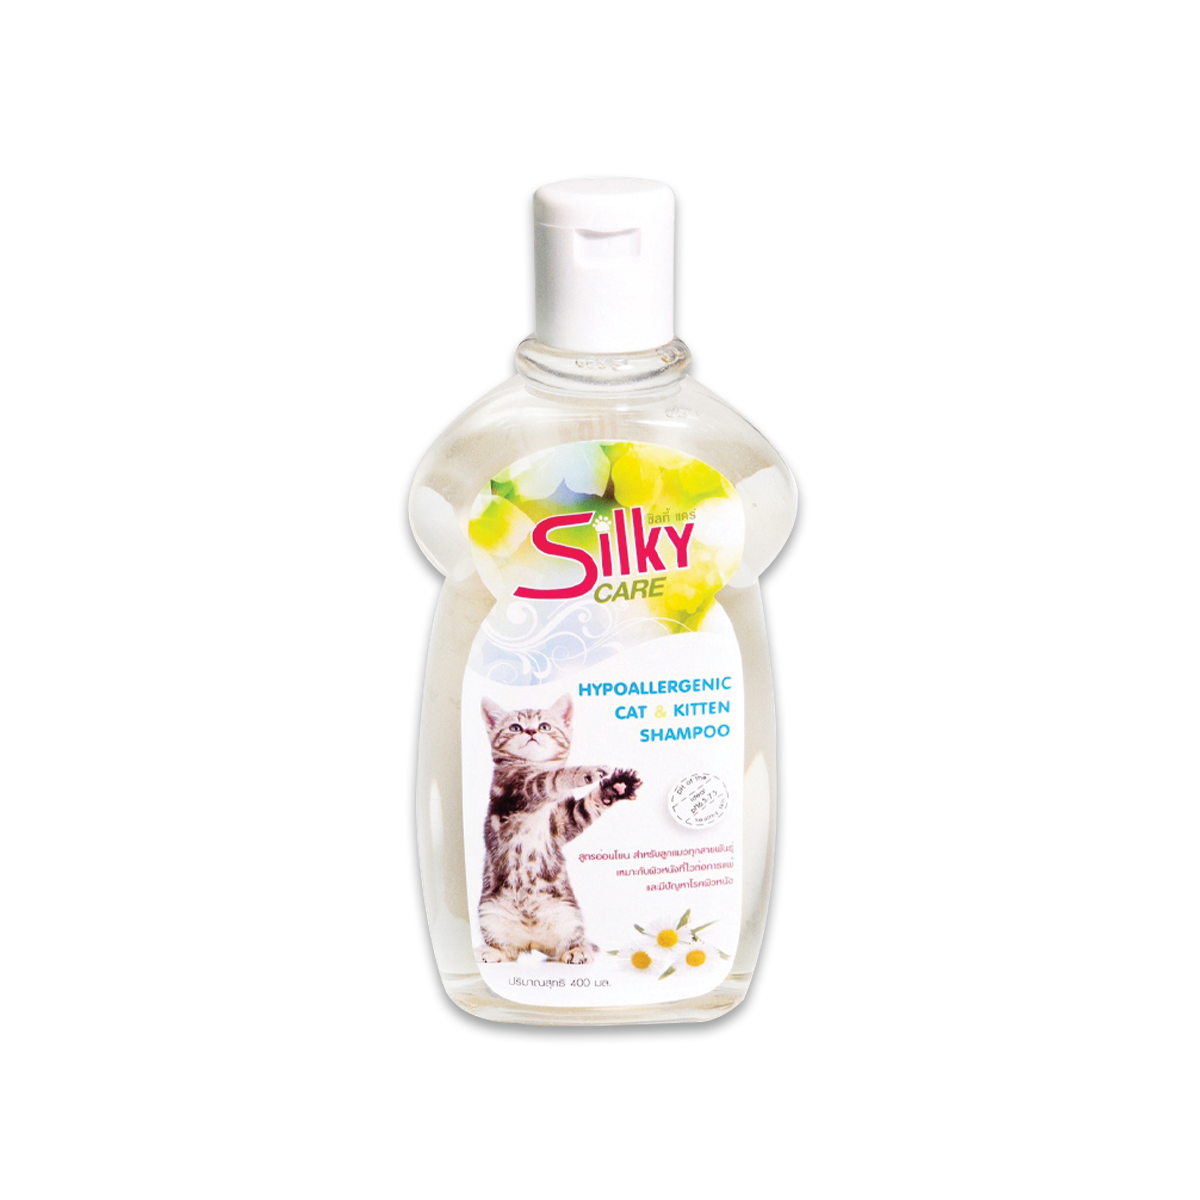 Silky Care ซิลกี้ แคร์ แชมพูแมว สูตร Hypoallergenic ขนาด 400 มล.